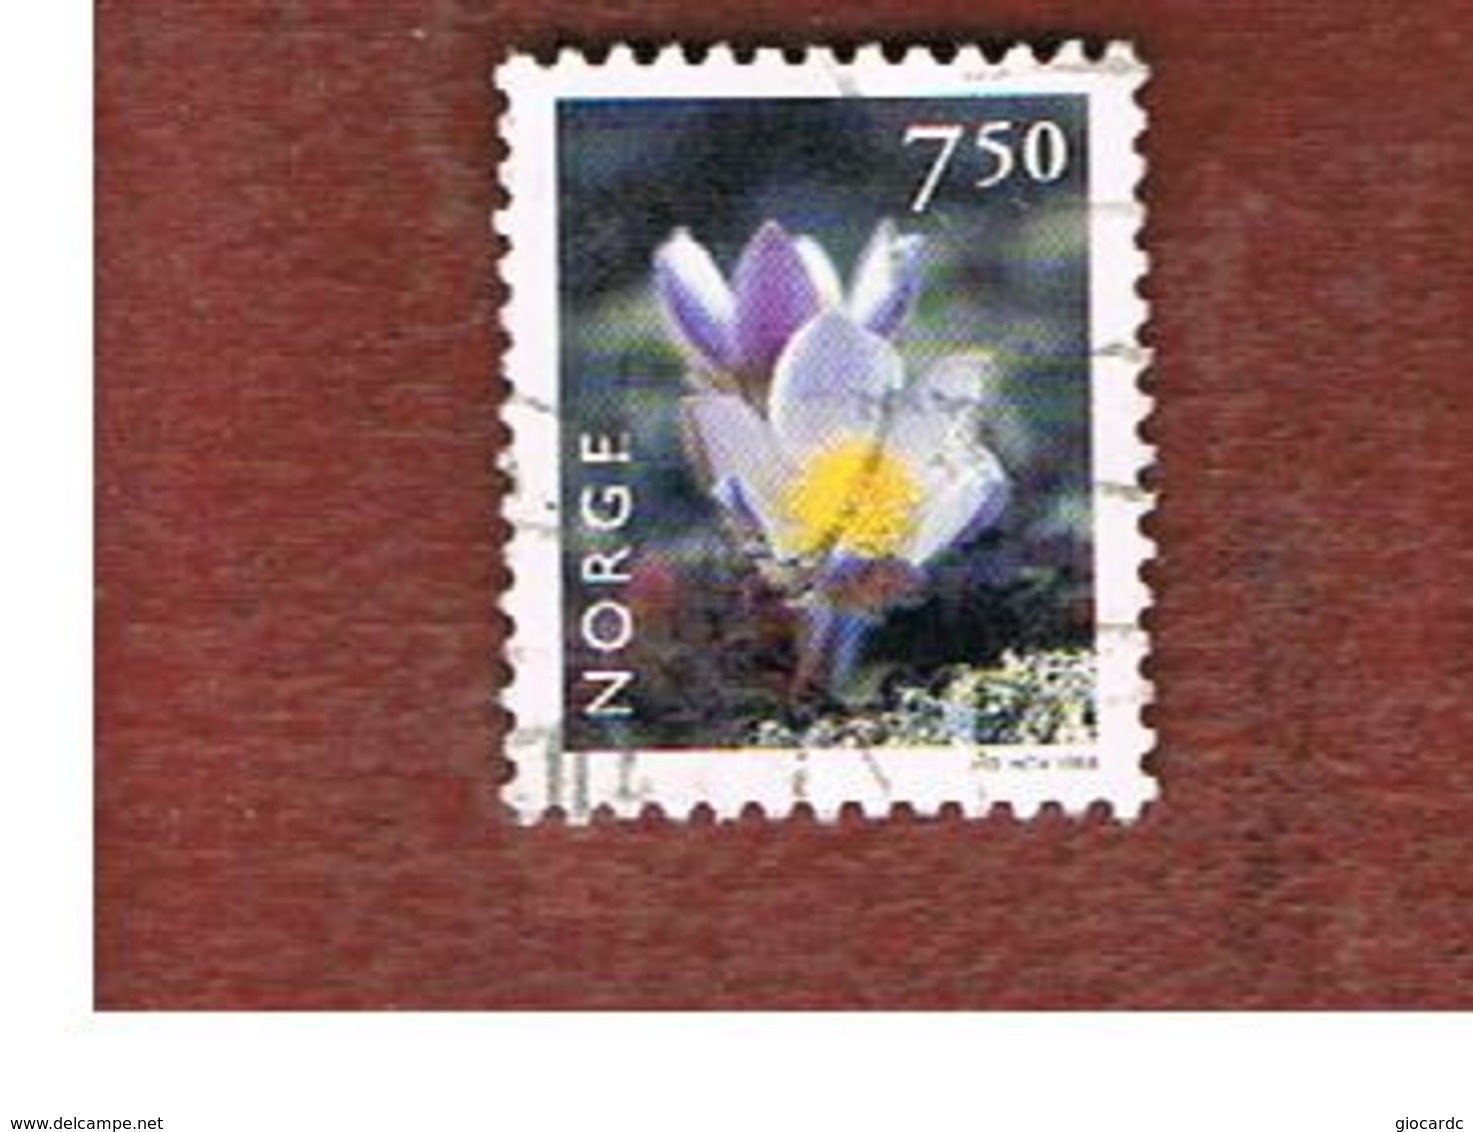 NORVEGIA (NORWAY) -   SG 1272   - 1998  FLOWERS:  PULSATILLA VULGARIS   7,50            - USED° - Gebraucht